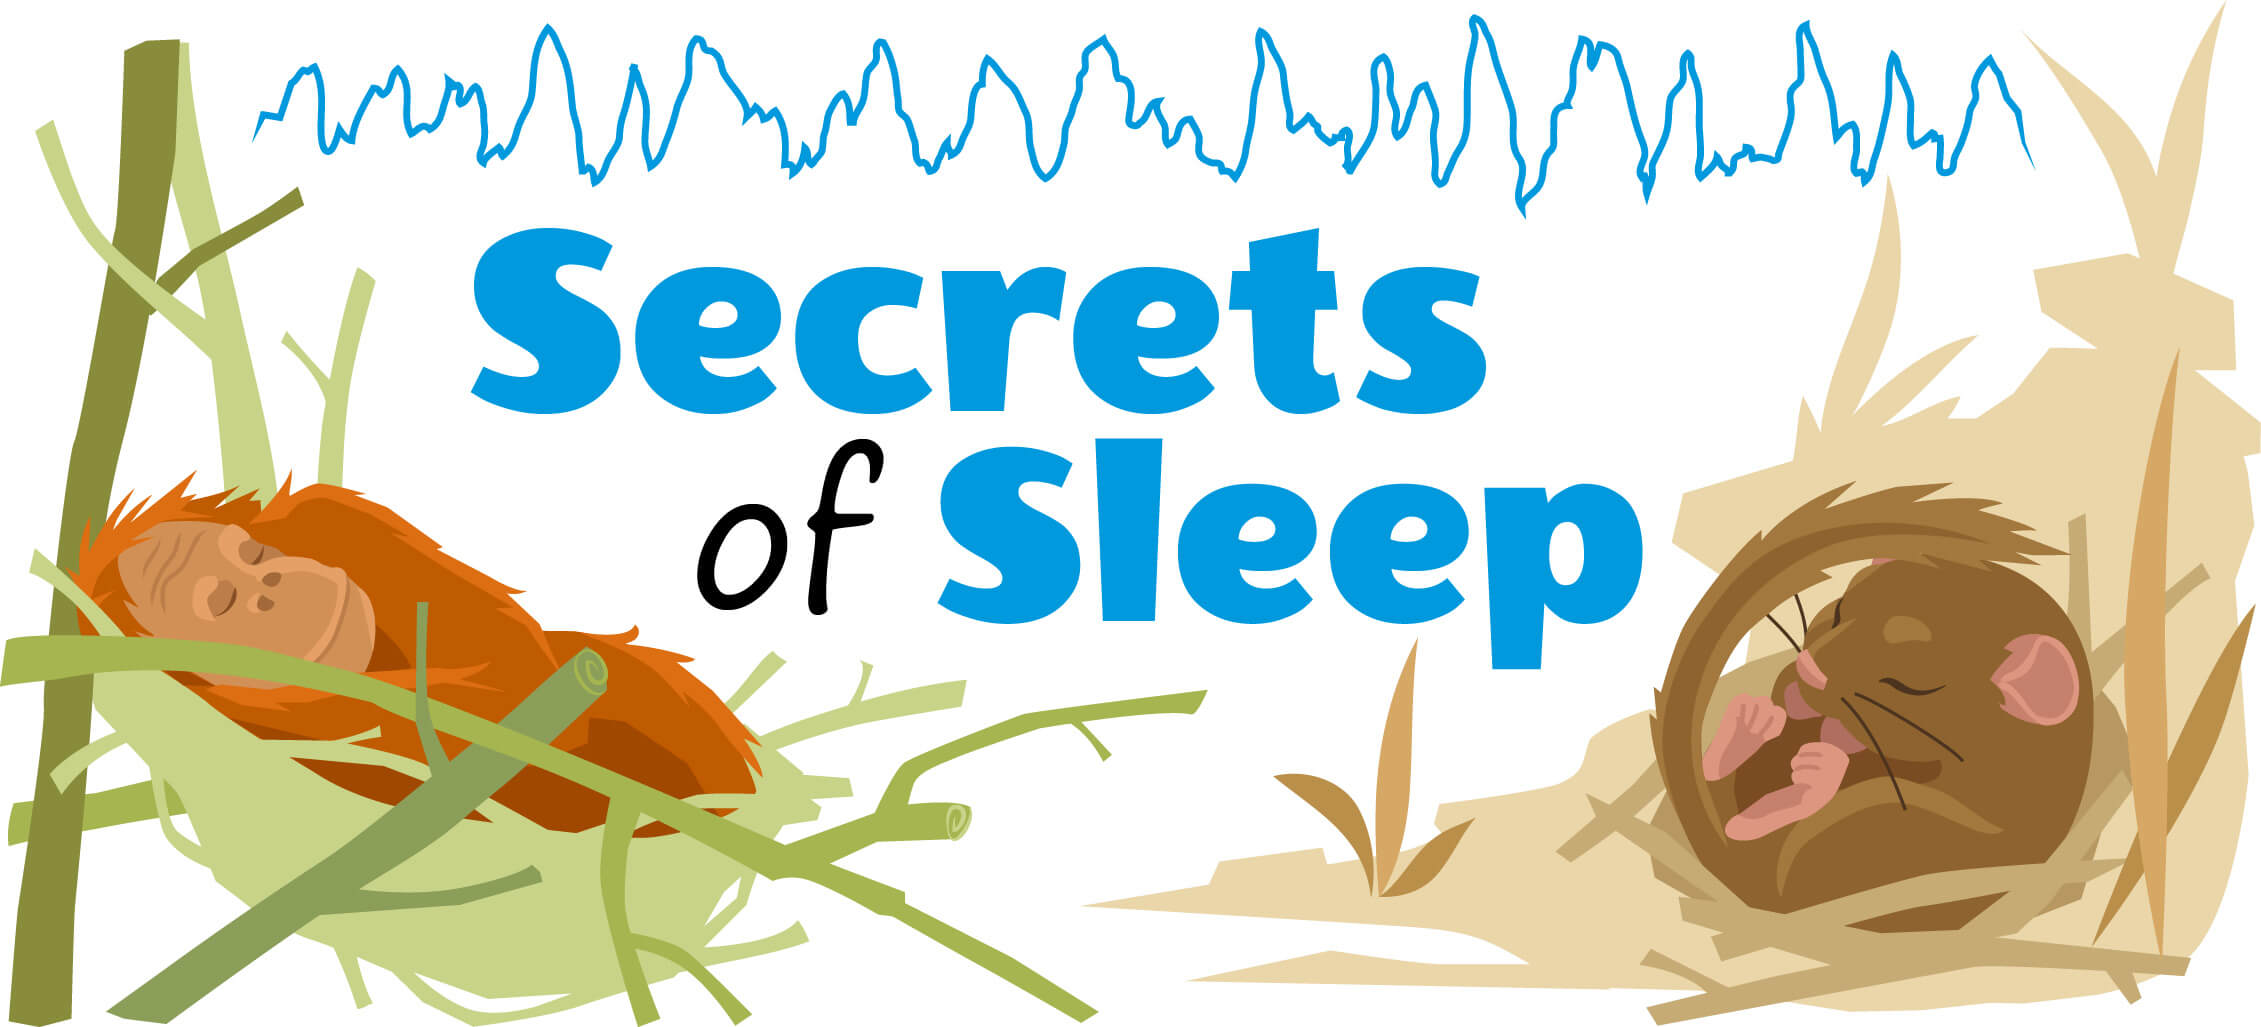 Secrets of sleep 